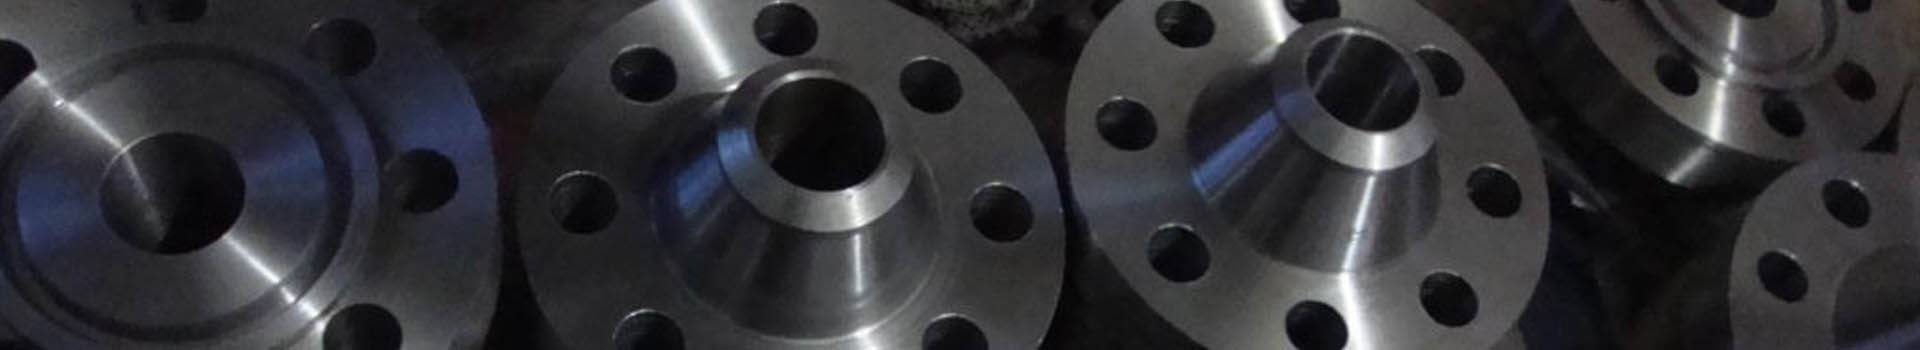 Butt weld Pipe Fittings